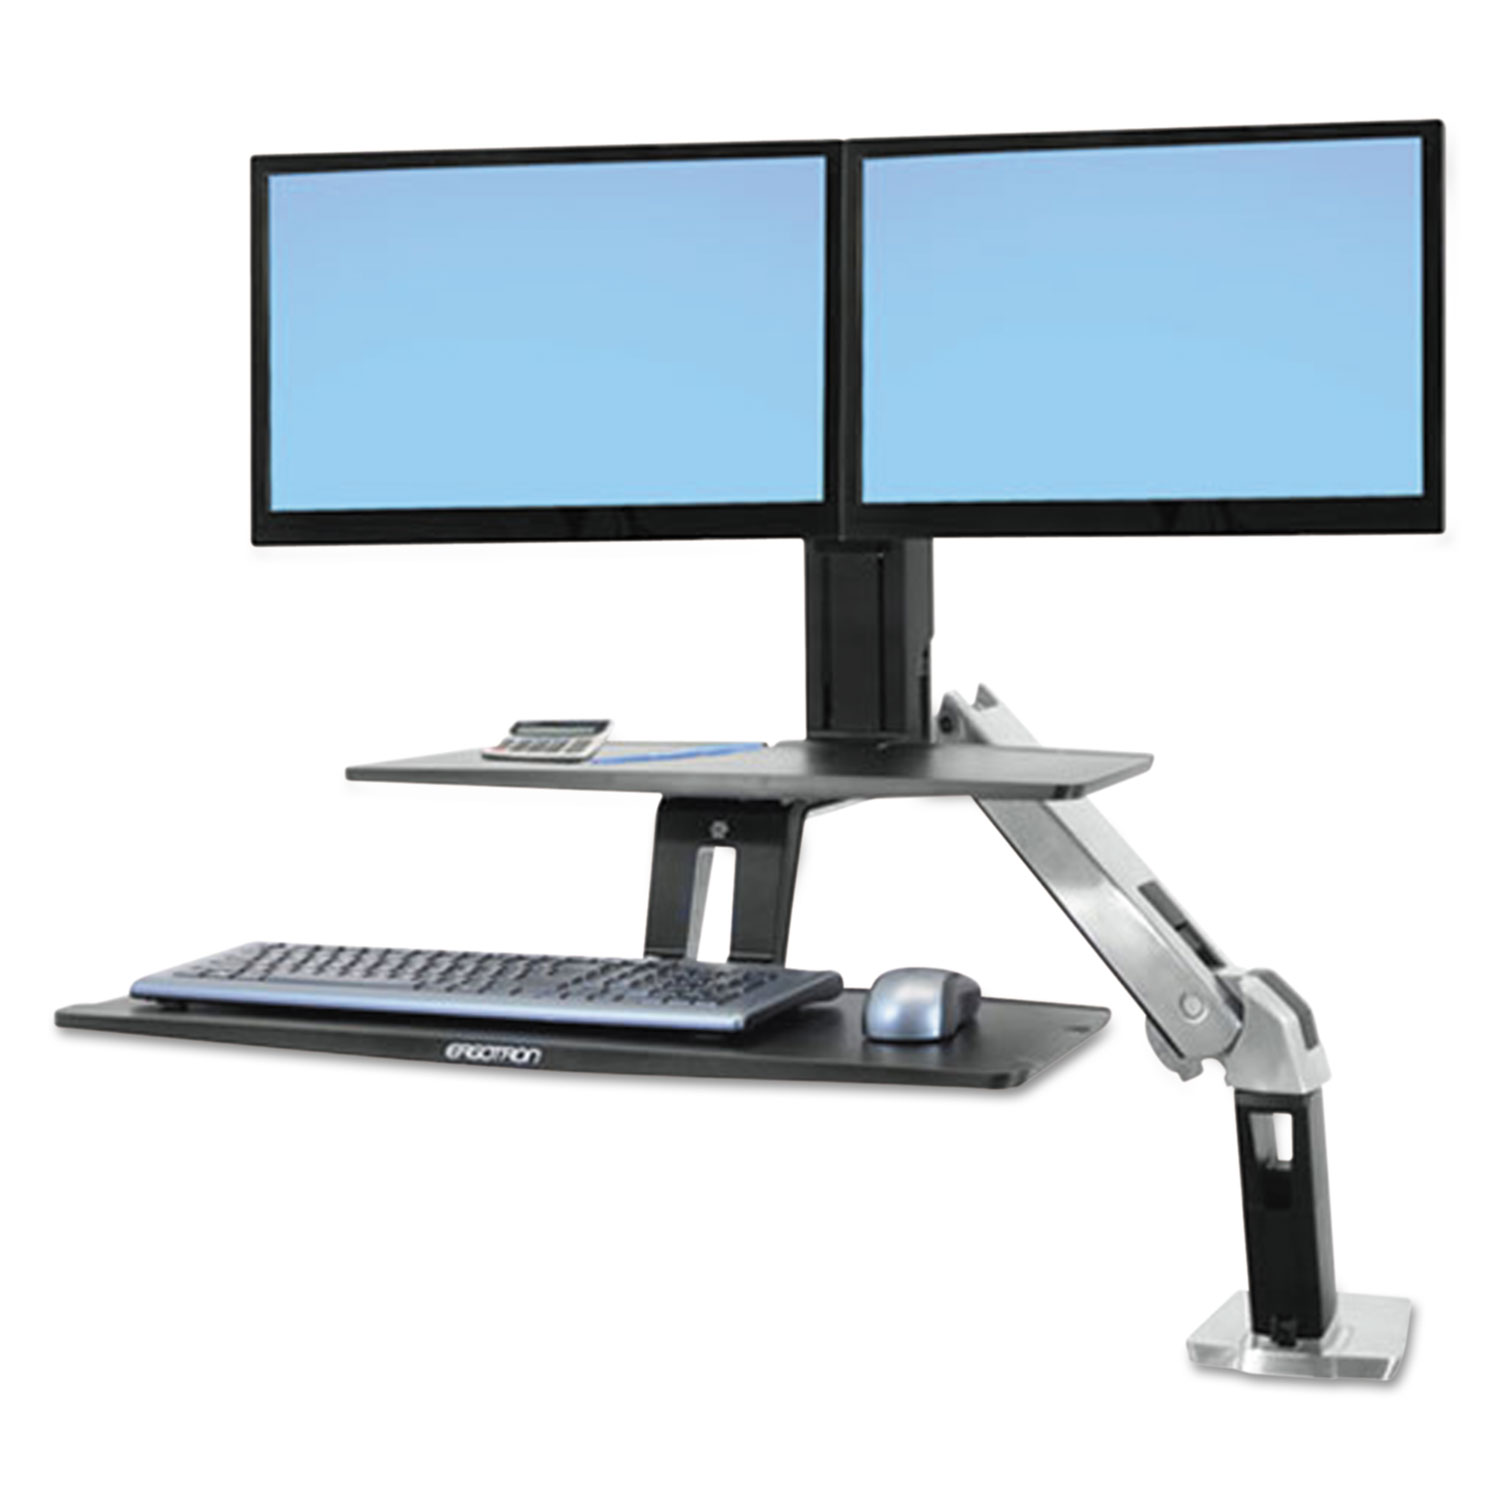 Ergotron WorkFit-A Dual Workstation With Suspended Keyboard - Standing desk converter - black, polished aluminum - image 5 of 5